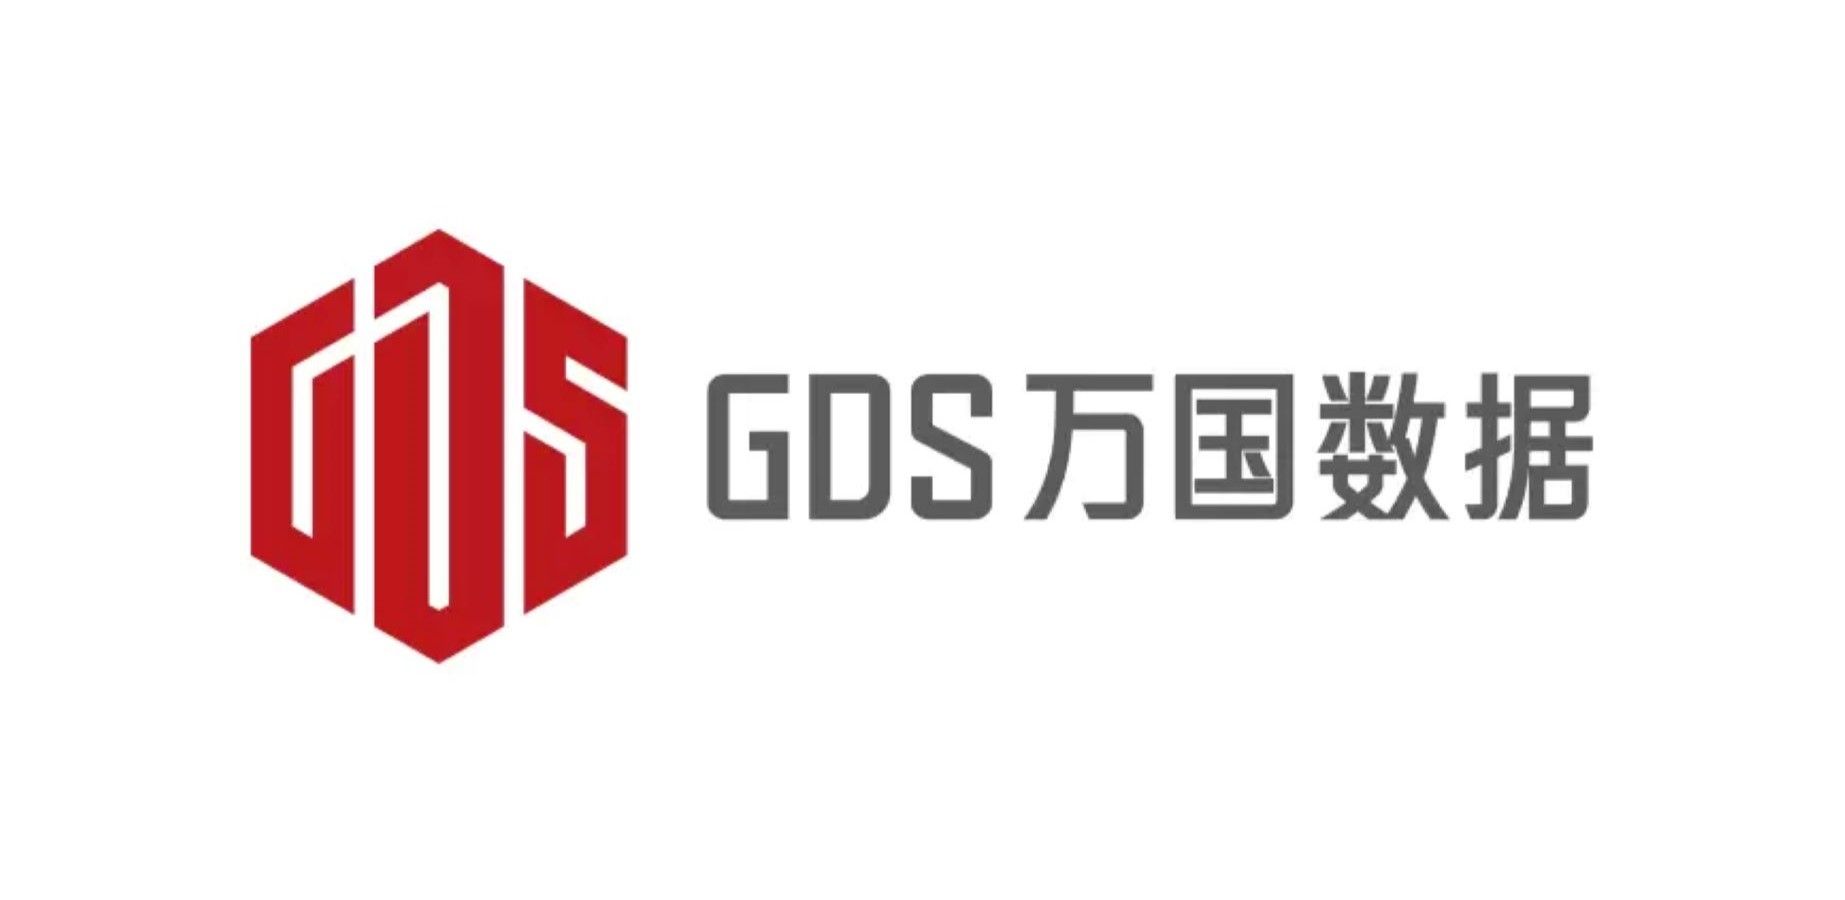 GDS Holdings (NASDAQ:GDS) Announces Landmark US$587 million Equity Raise for its International Business